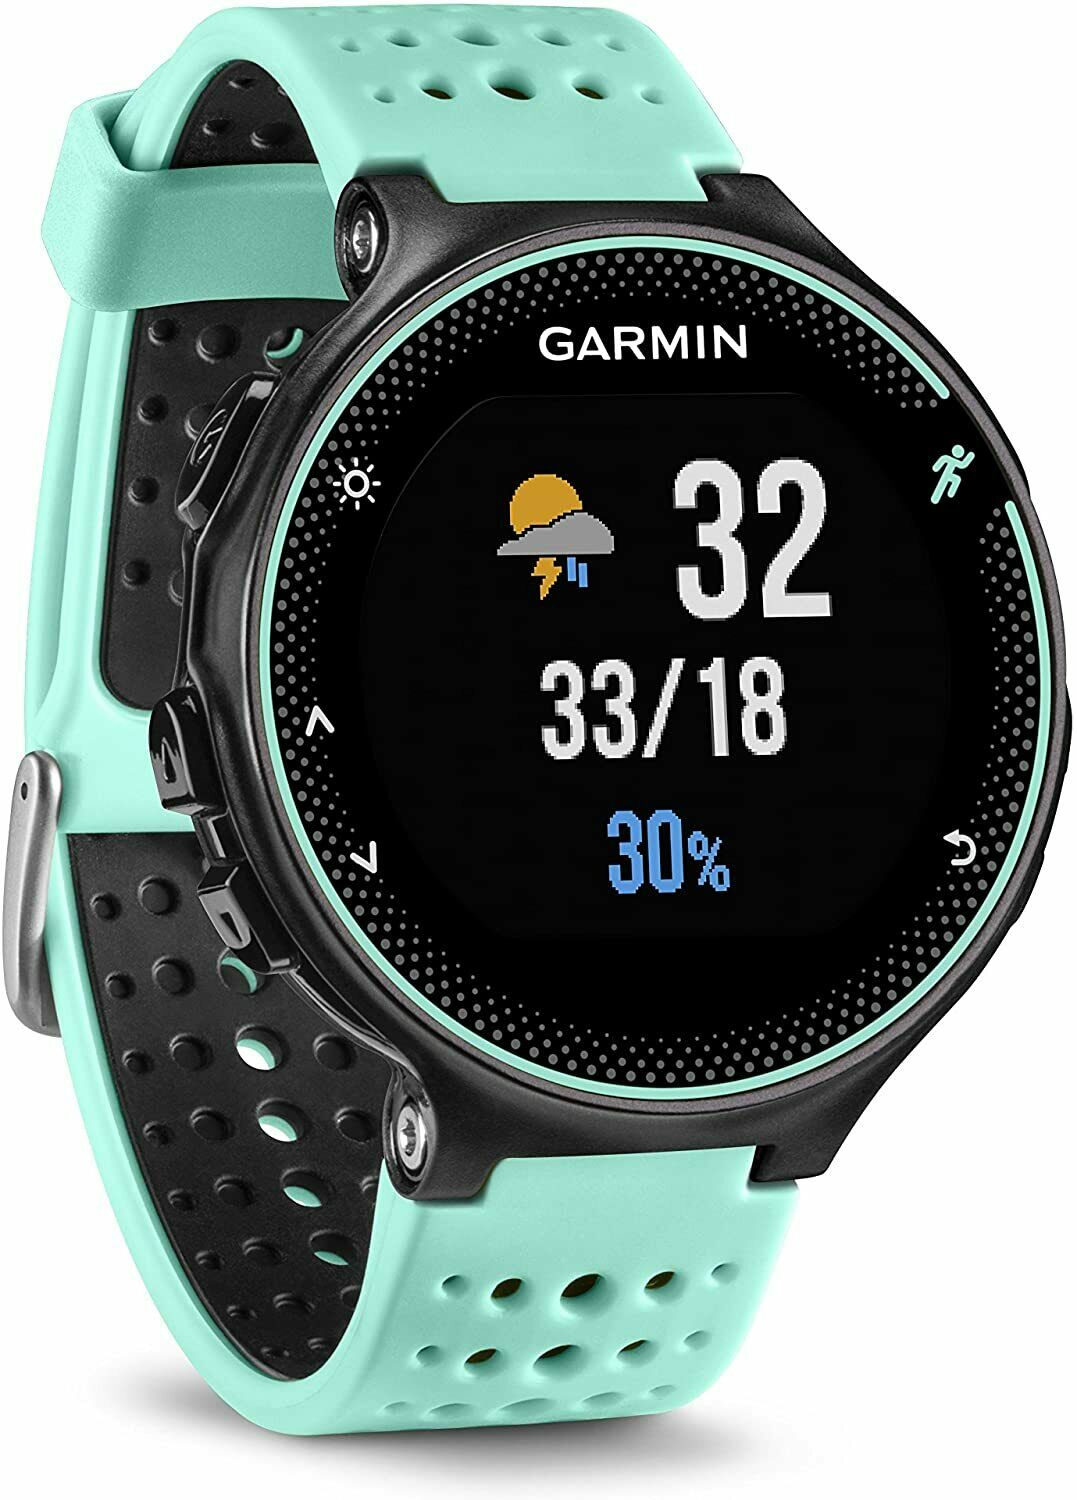 Garmin Forerunner 235 Gps Running Watch - Frost Blue | Certified Refurbished